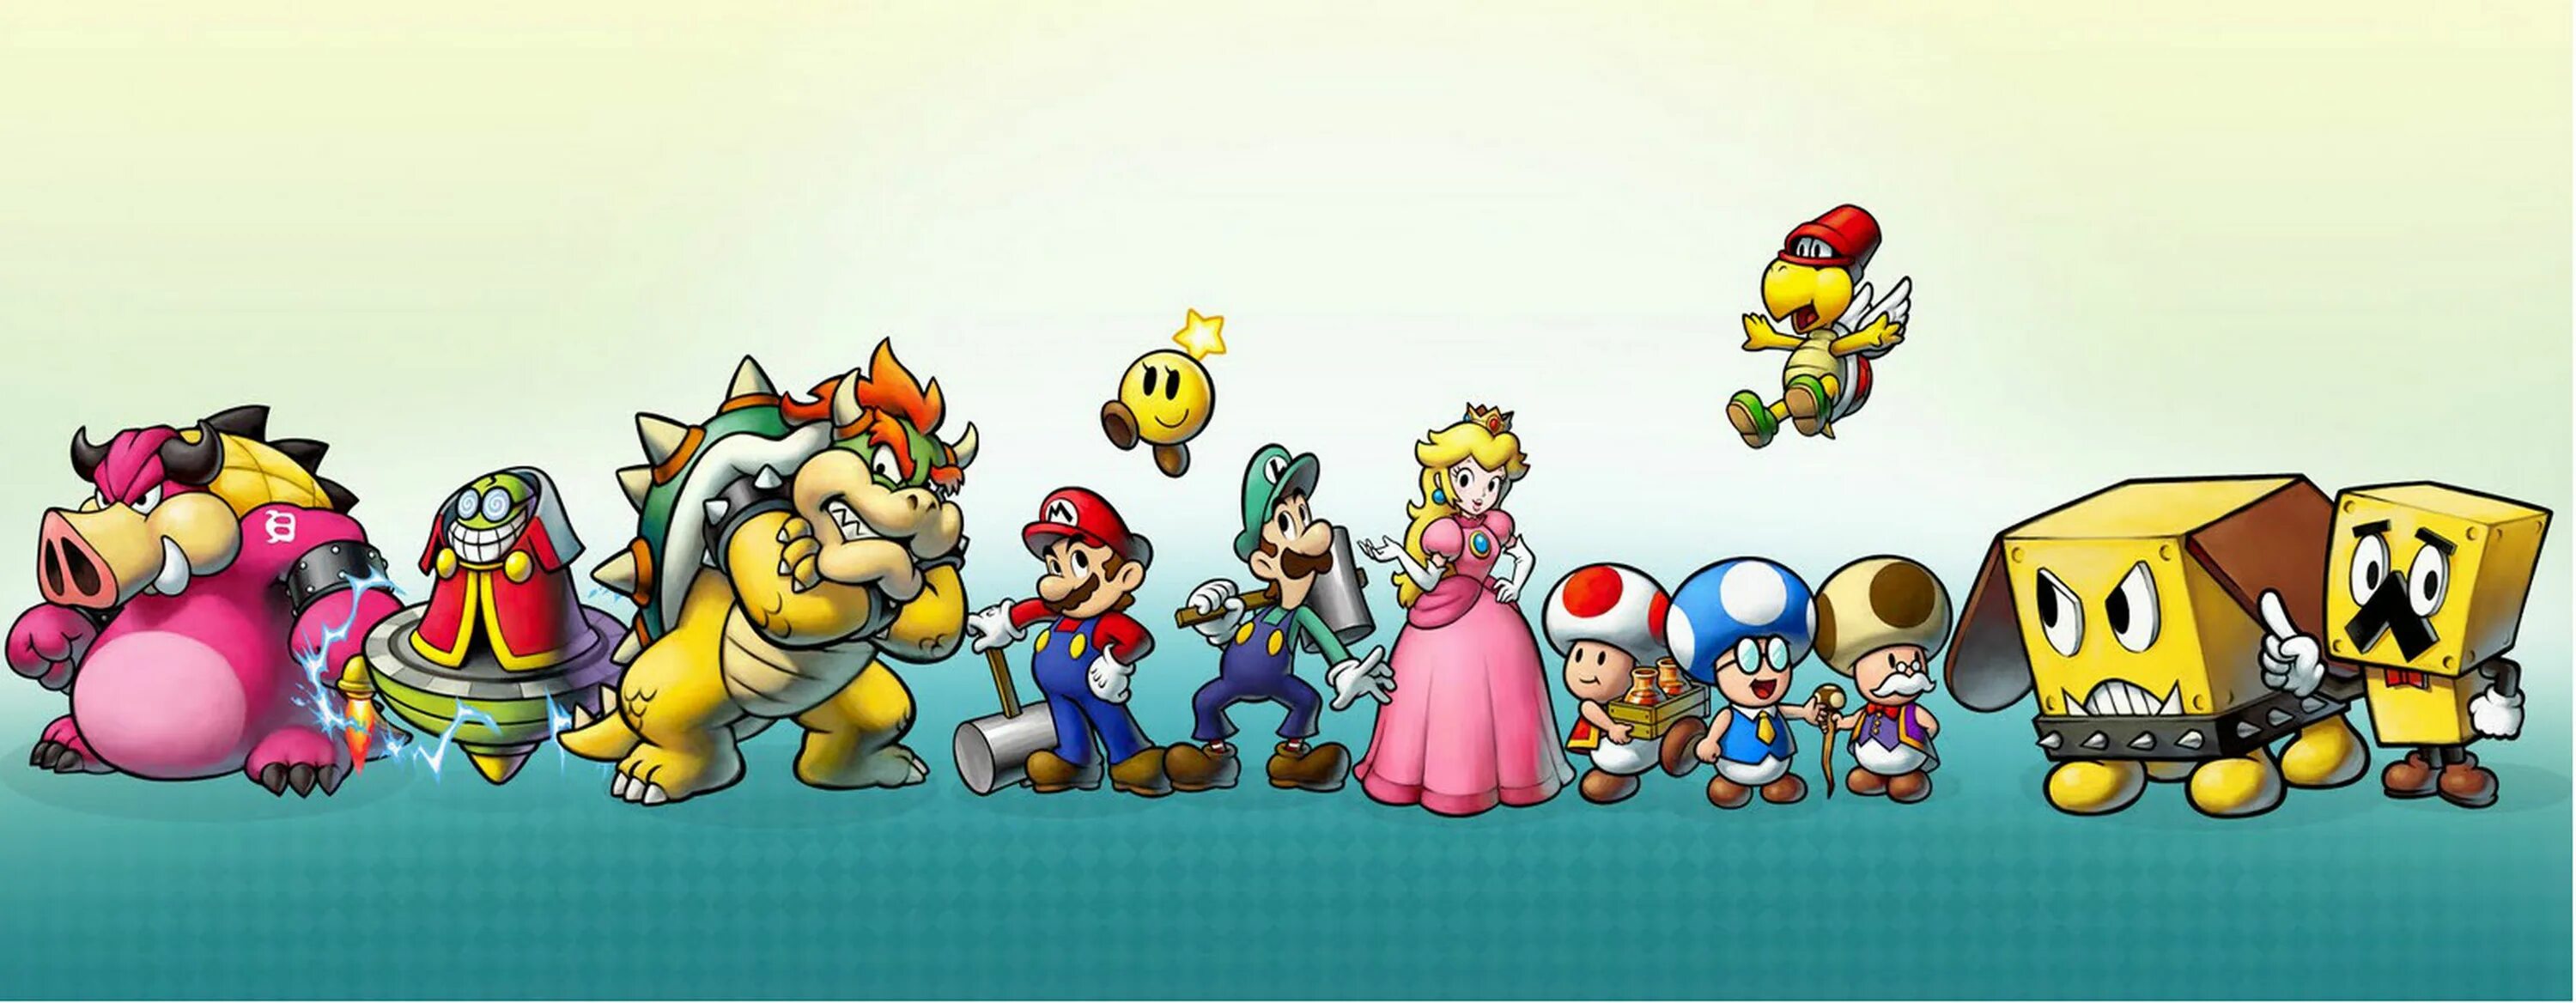 Марио и Луиджи Боузер инсайд стори. Марио и Луиджи и Боузер. Mario and Luigi Bowser's inside story DS. Марио Bowser inside story.